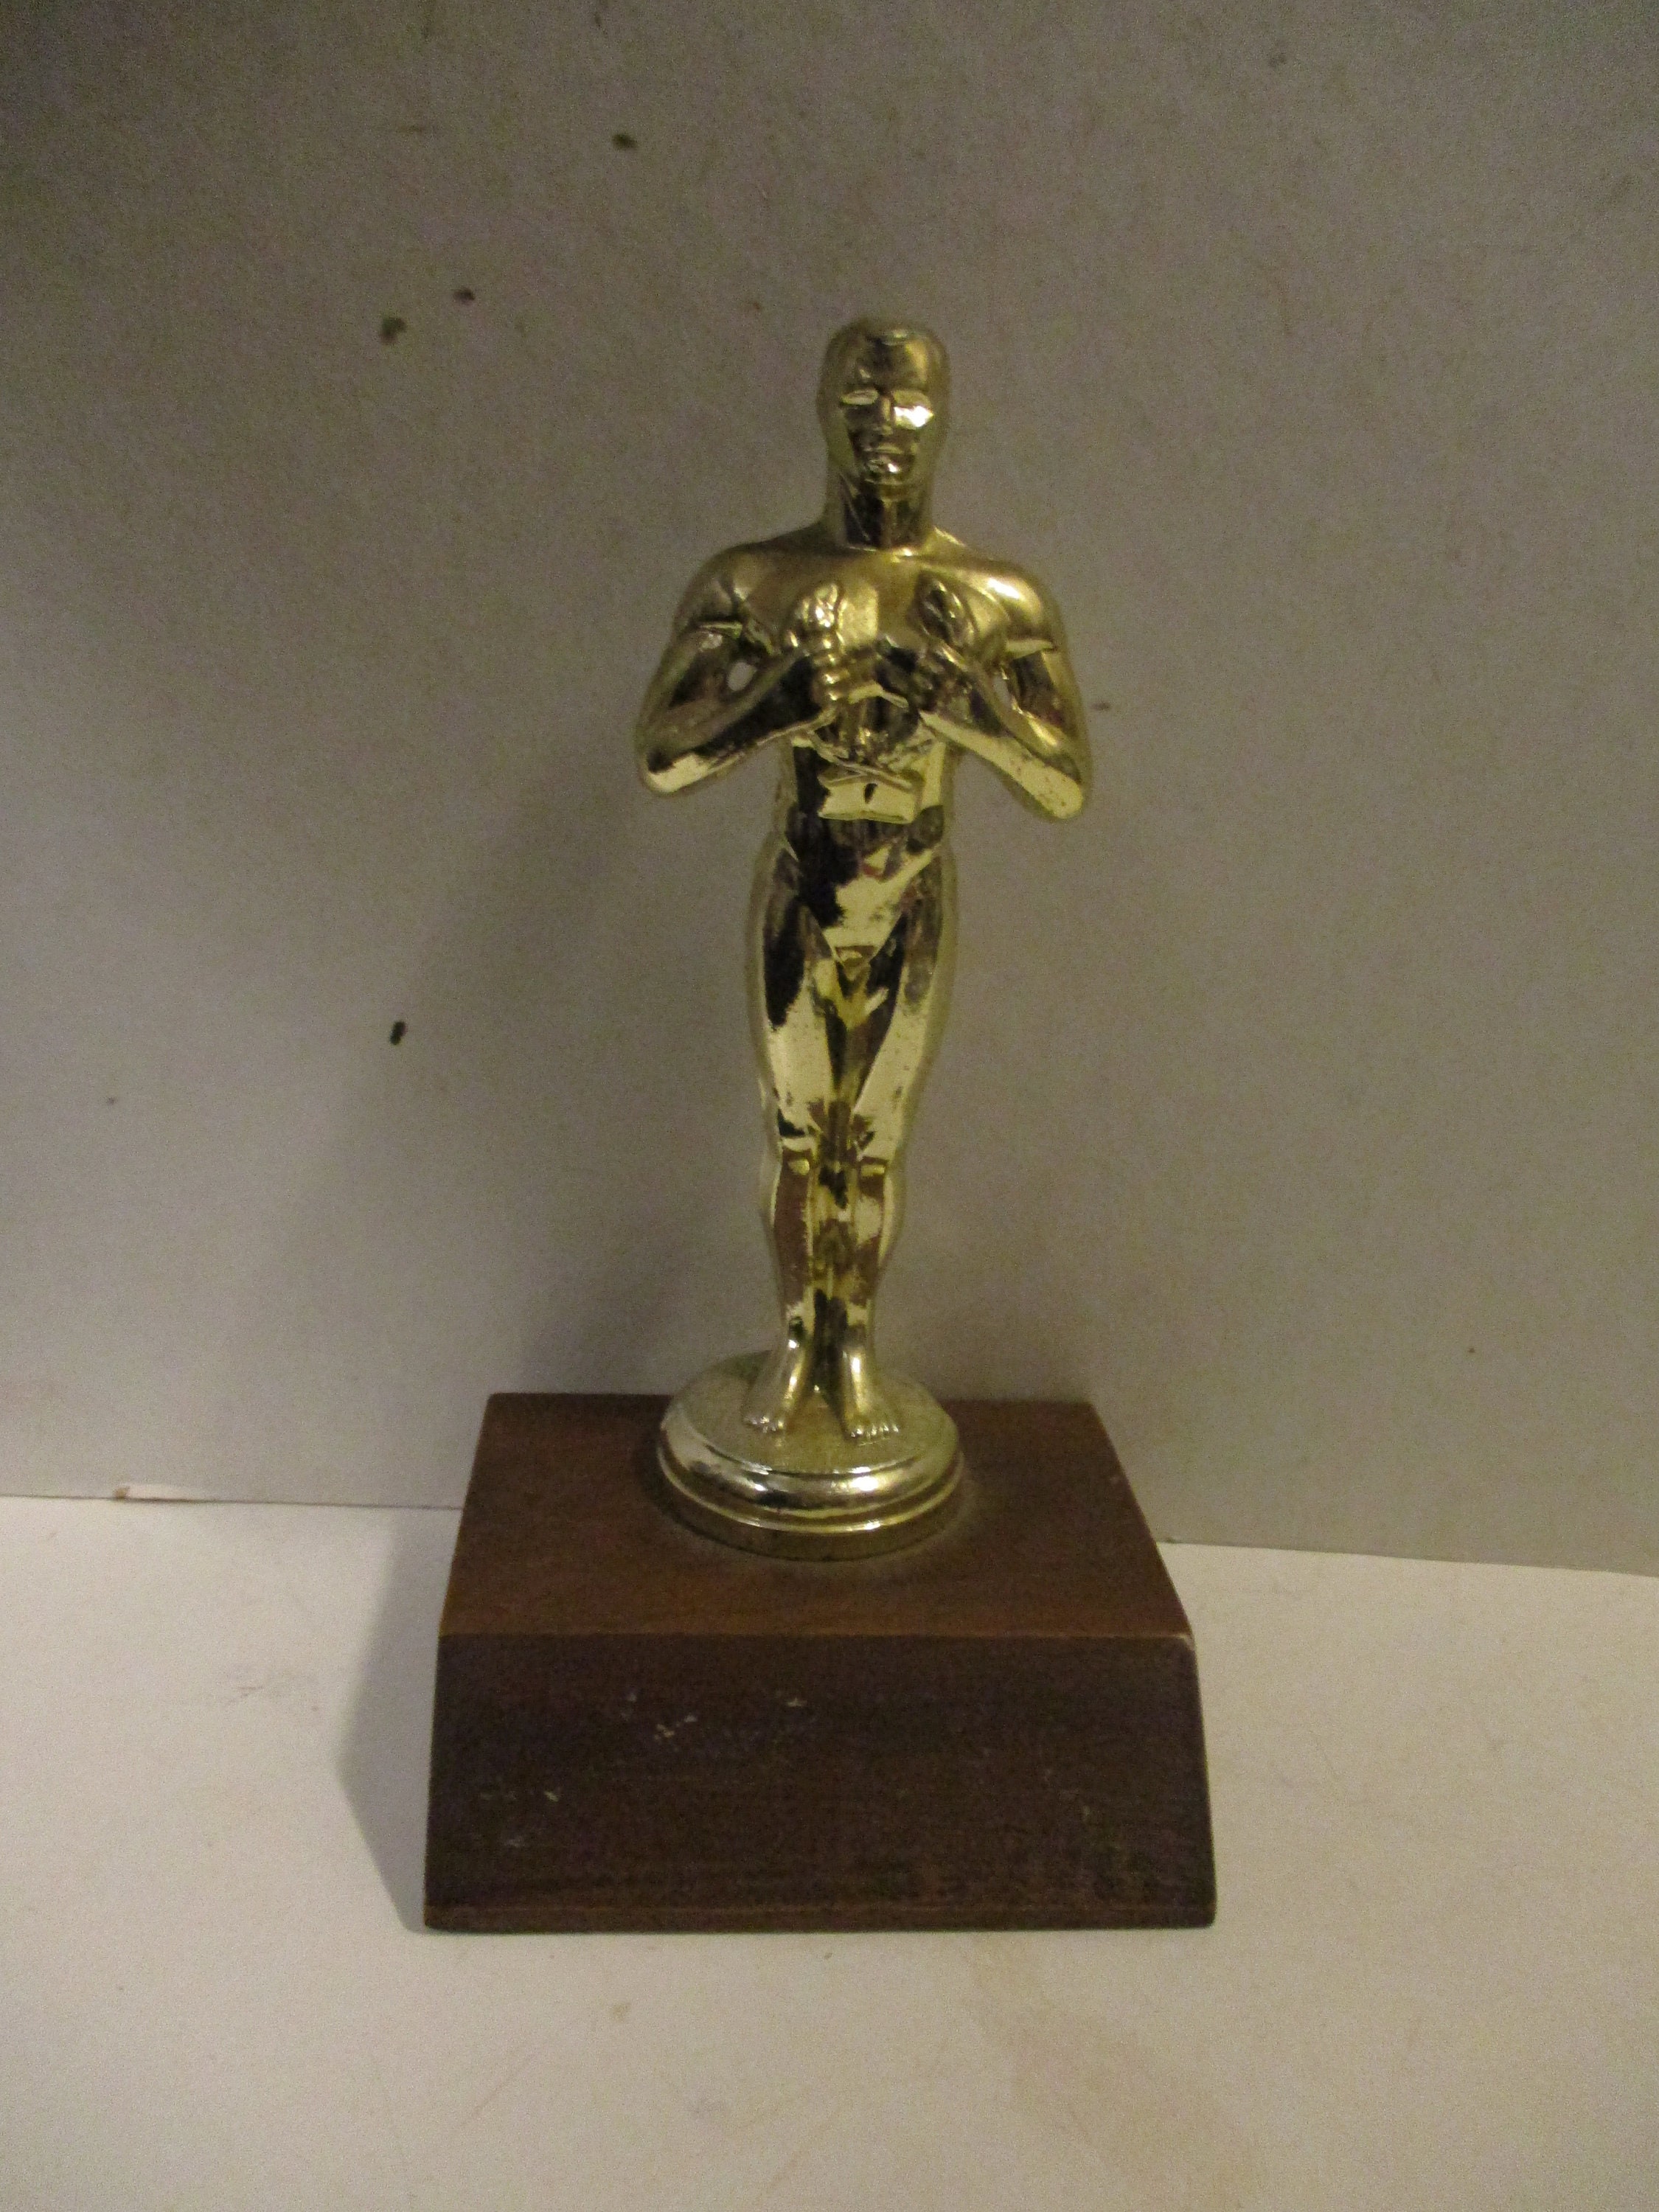 0230 *Oscar Estatuilla Trofeo* (16 cm.) 1 Pca.